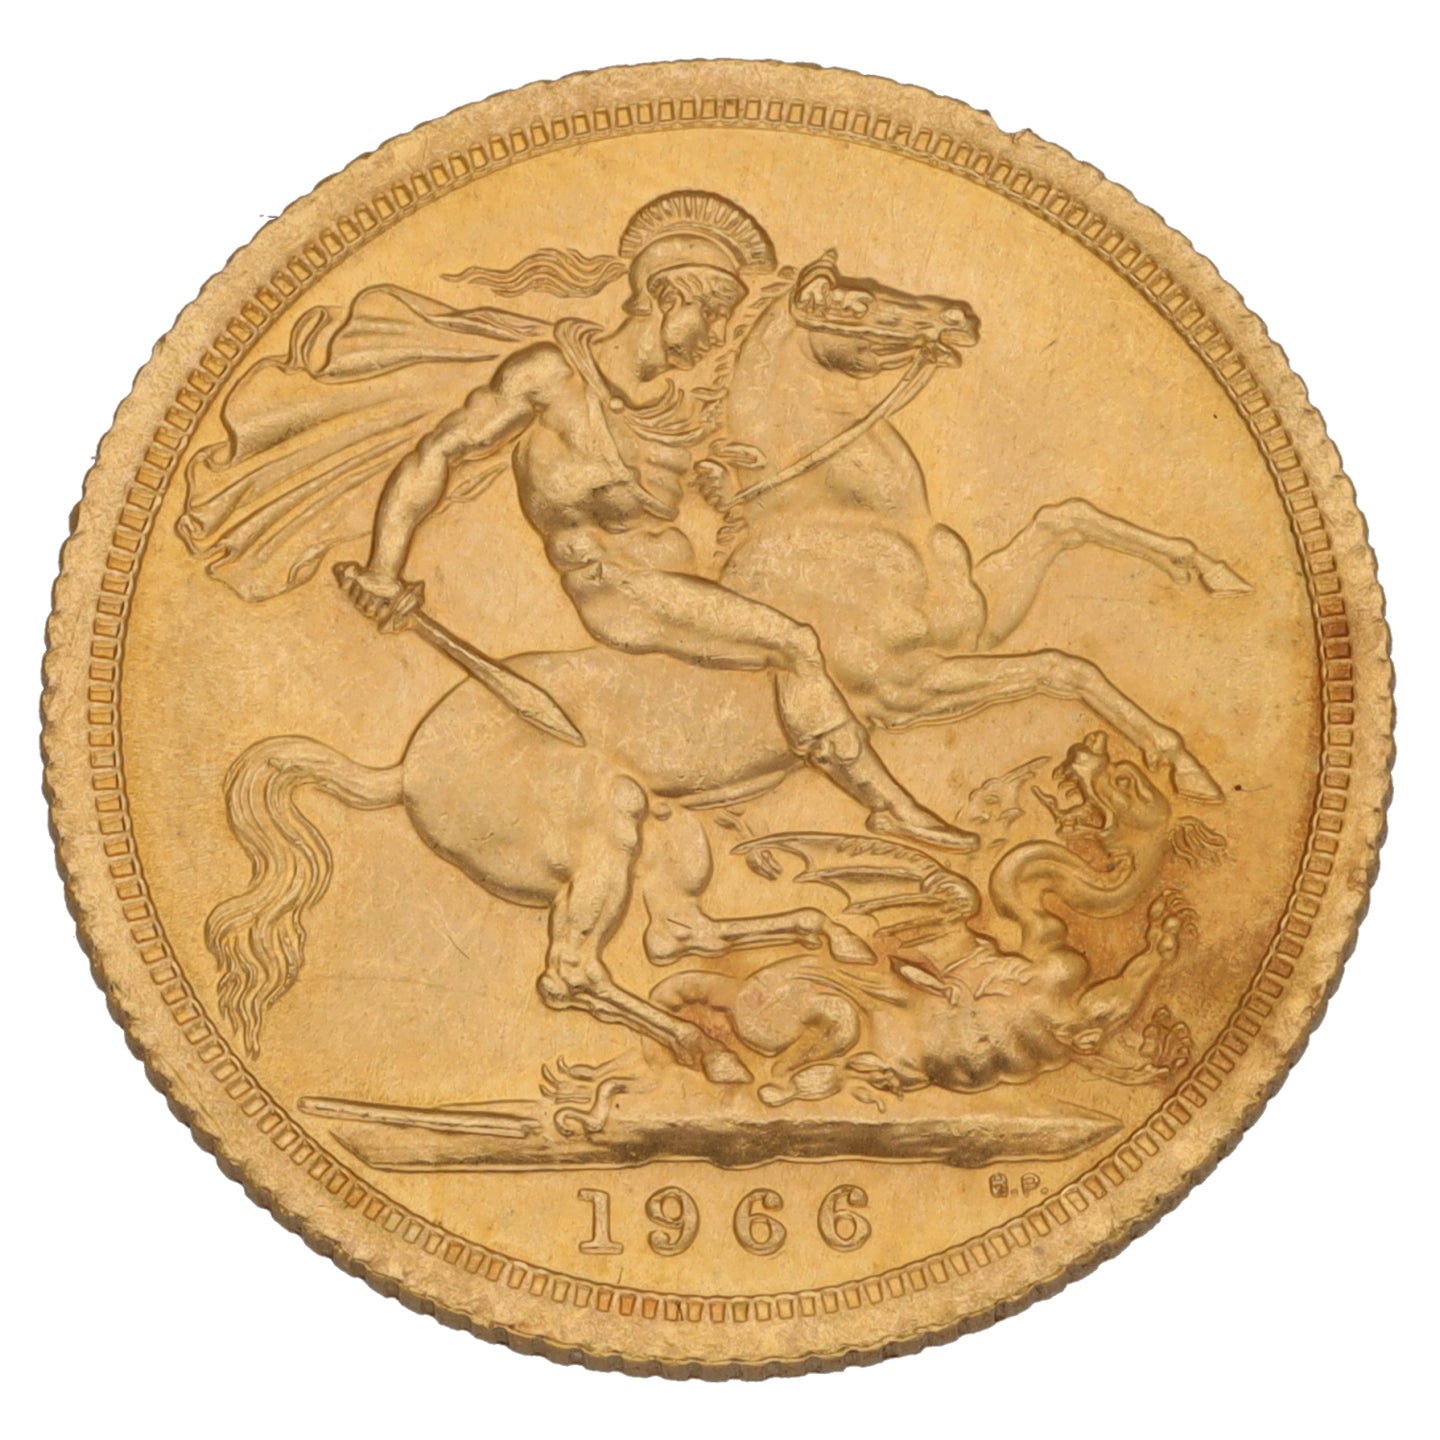 22ct Gold Queen Elizabeth II Full Sovereign Coin 1966